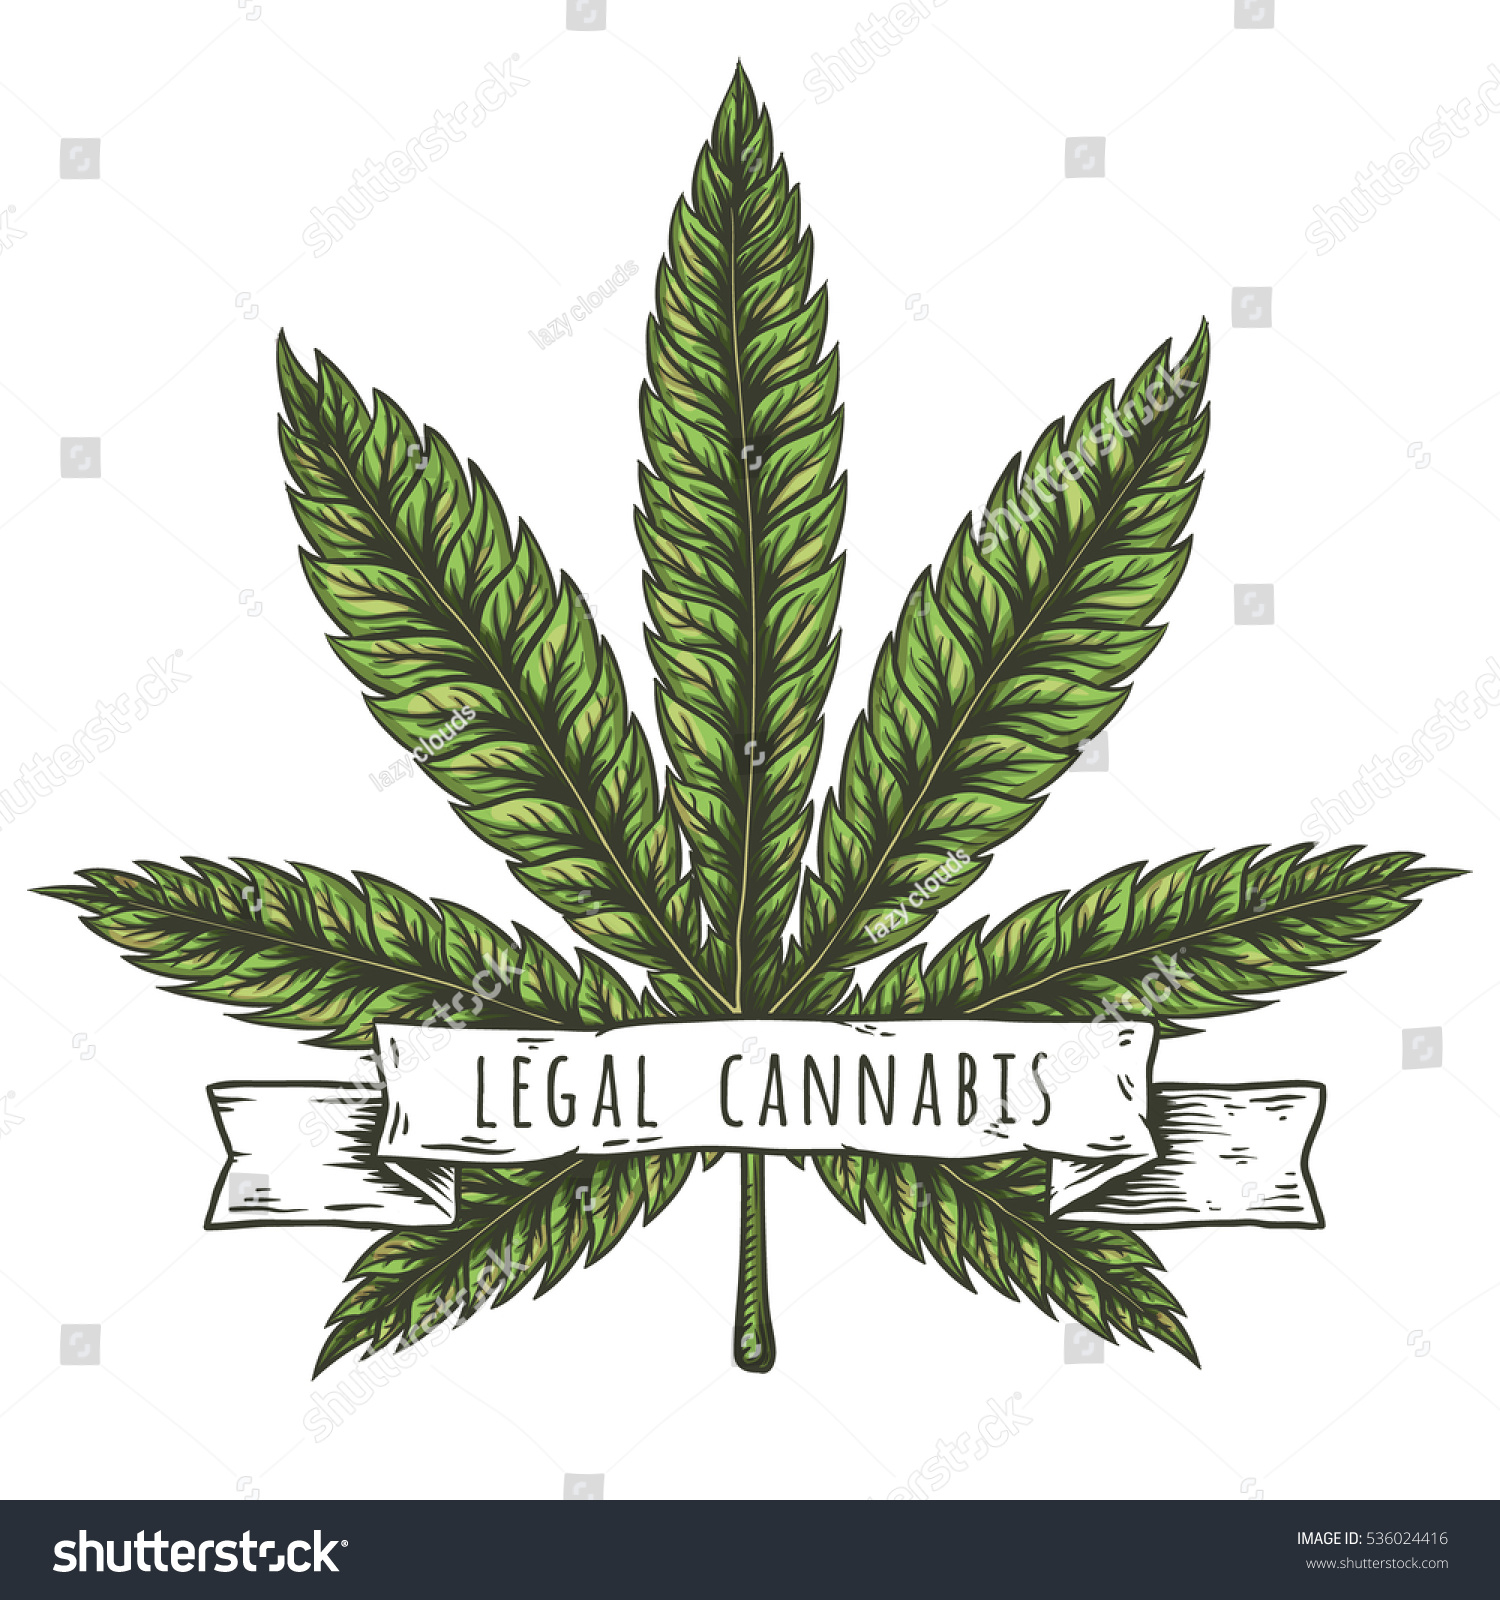 Edit Vectors Free Online - Cannabis leaf. | Shutterstock Editor